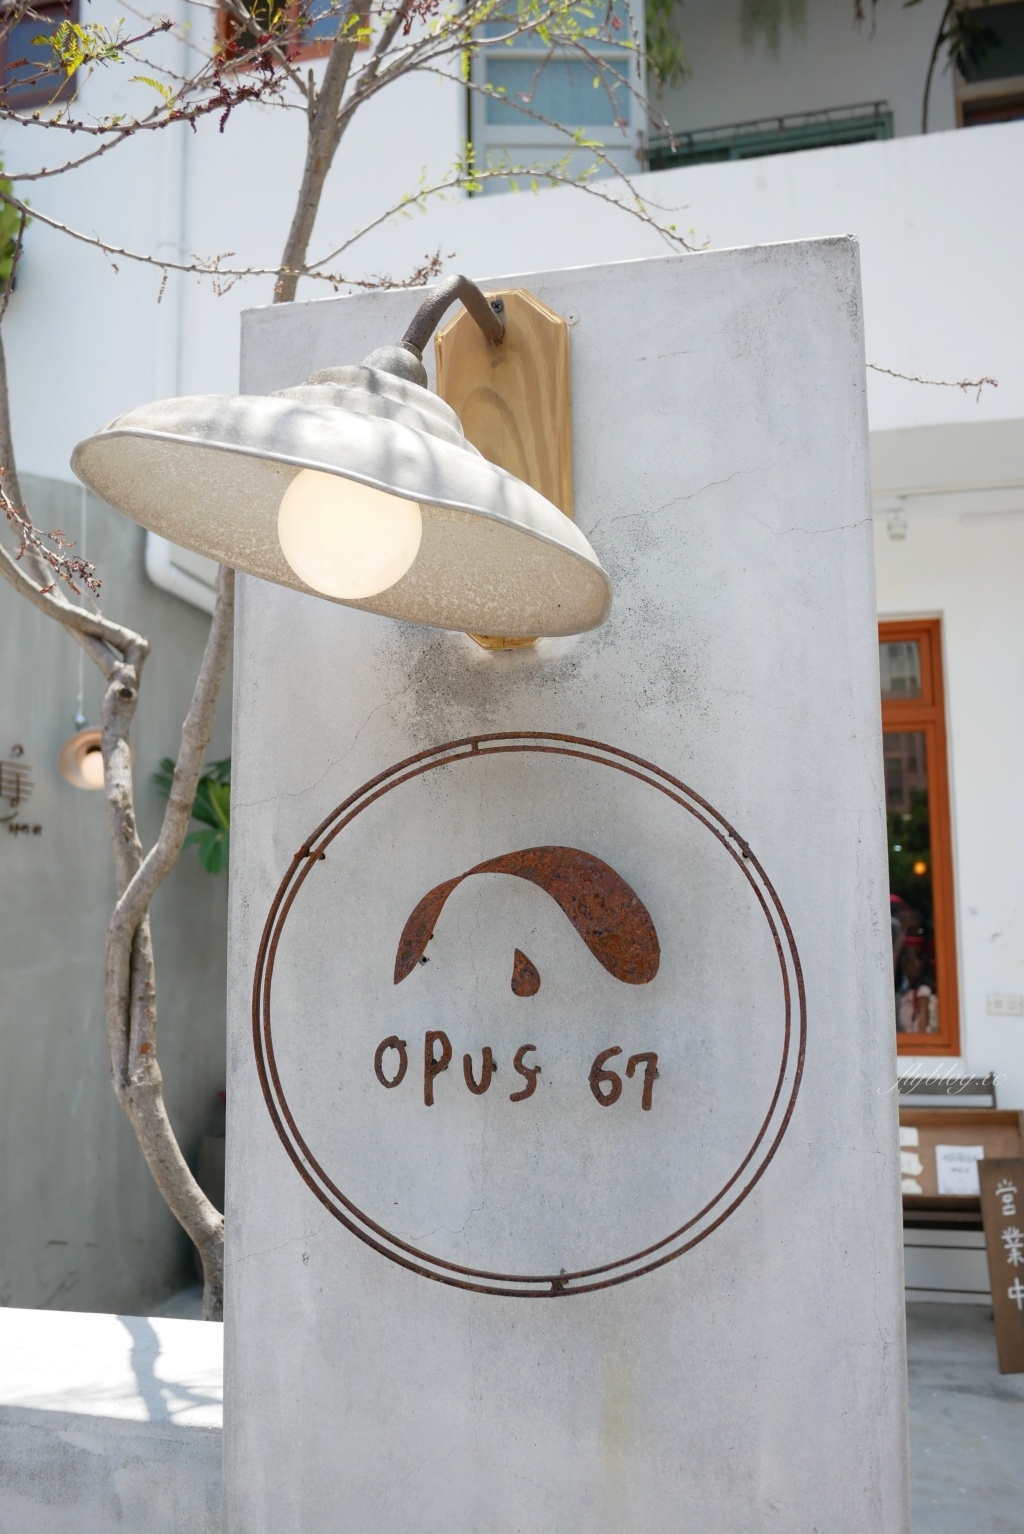 Opus 67｜序曲早午餐新品牌Opus 67，老宅悠閒空間面對大片綠地 @飛天璇的口袋